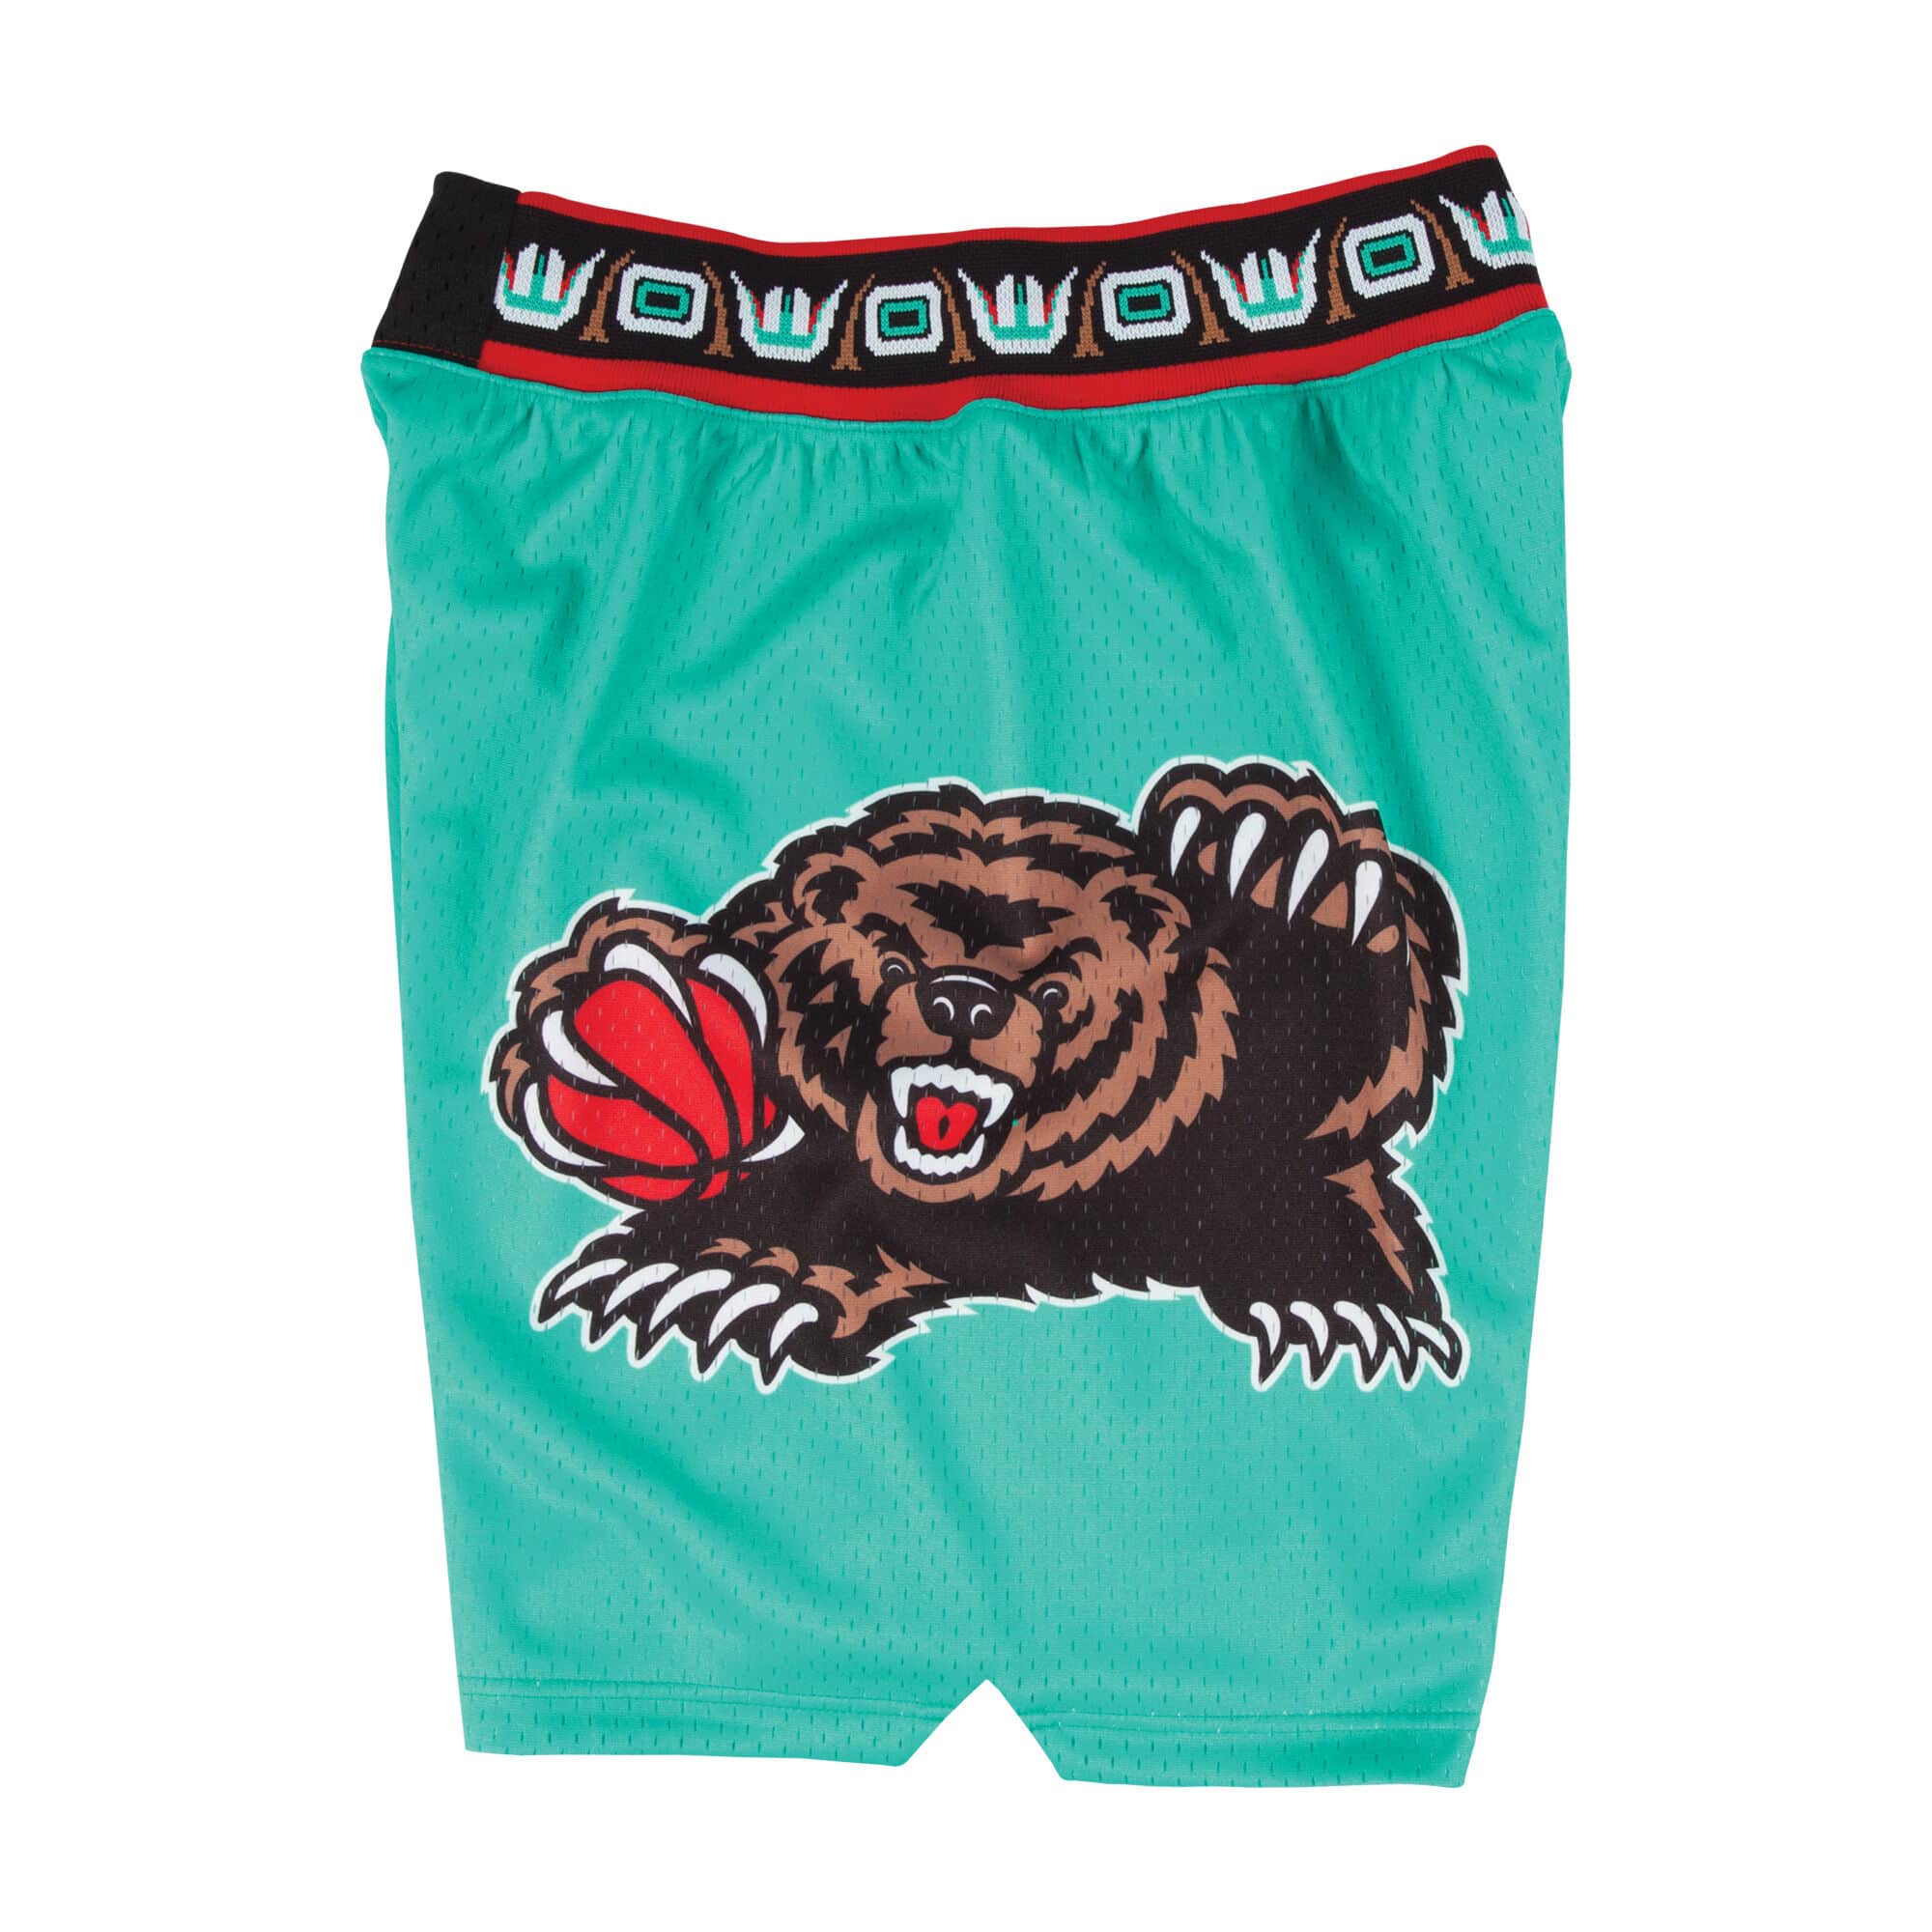 swingman shorts vancouver grizzlies